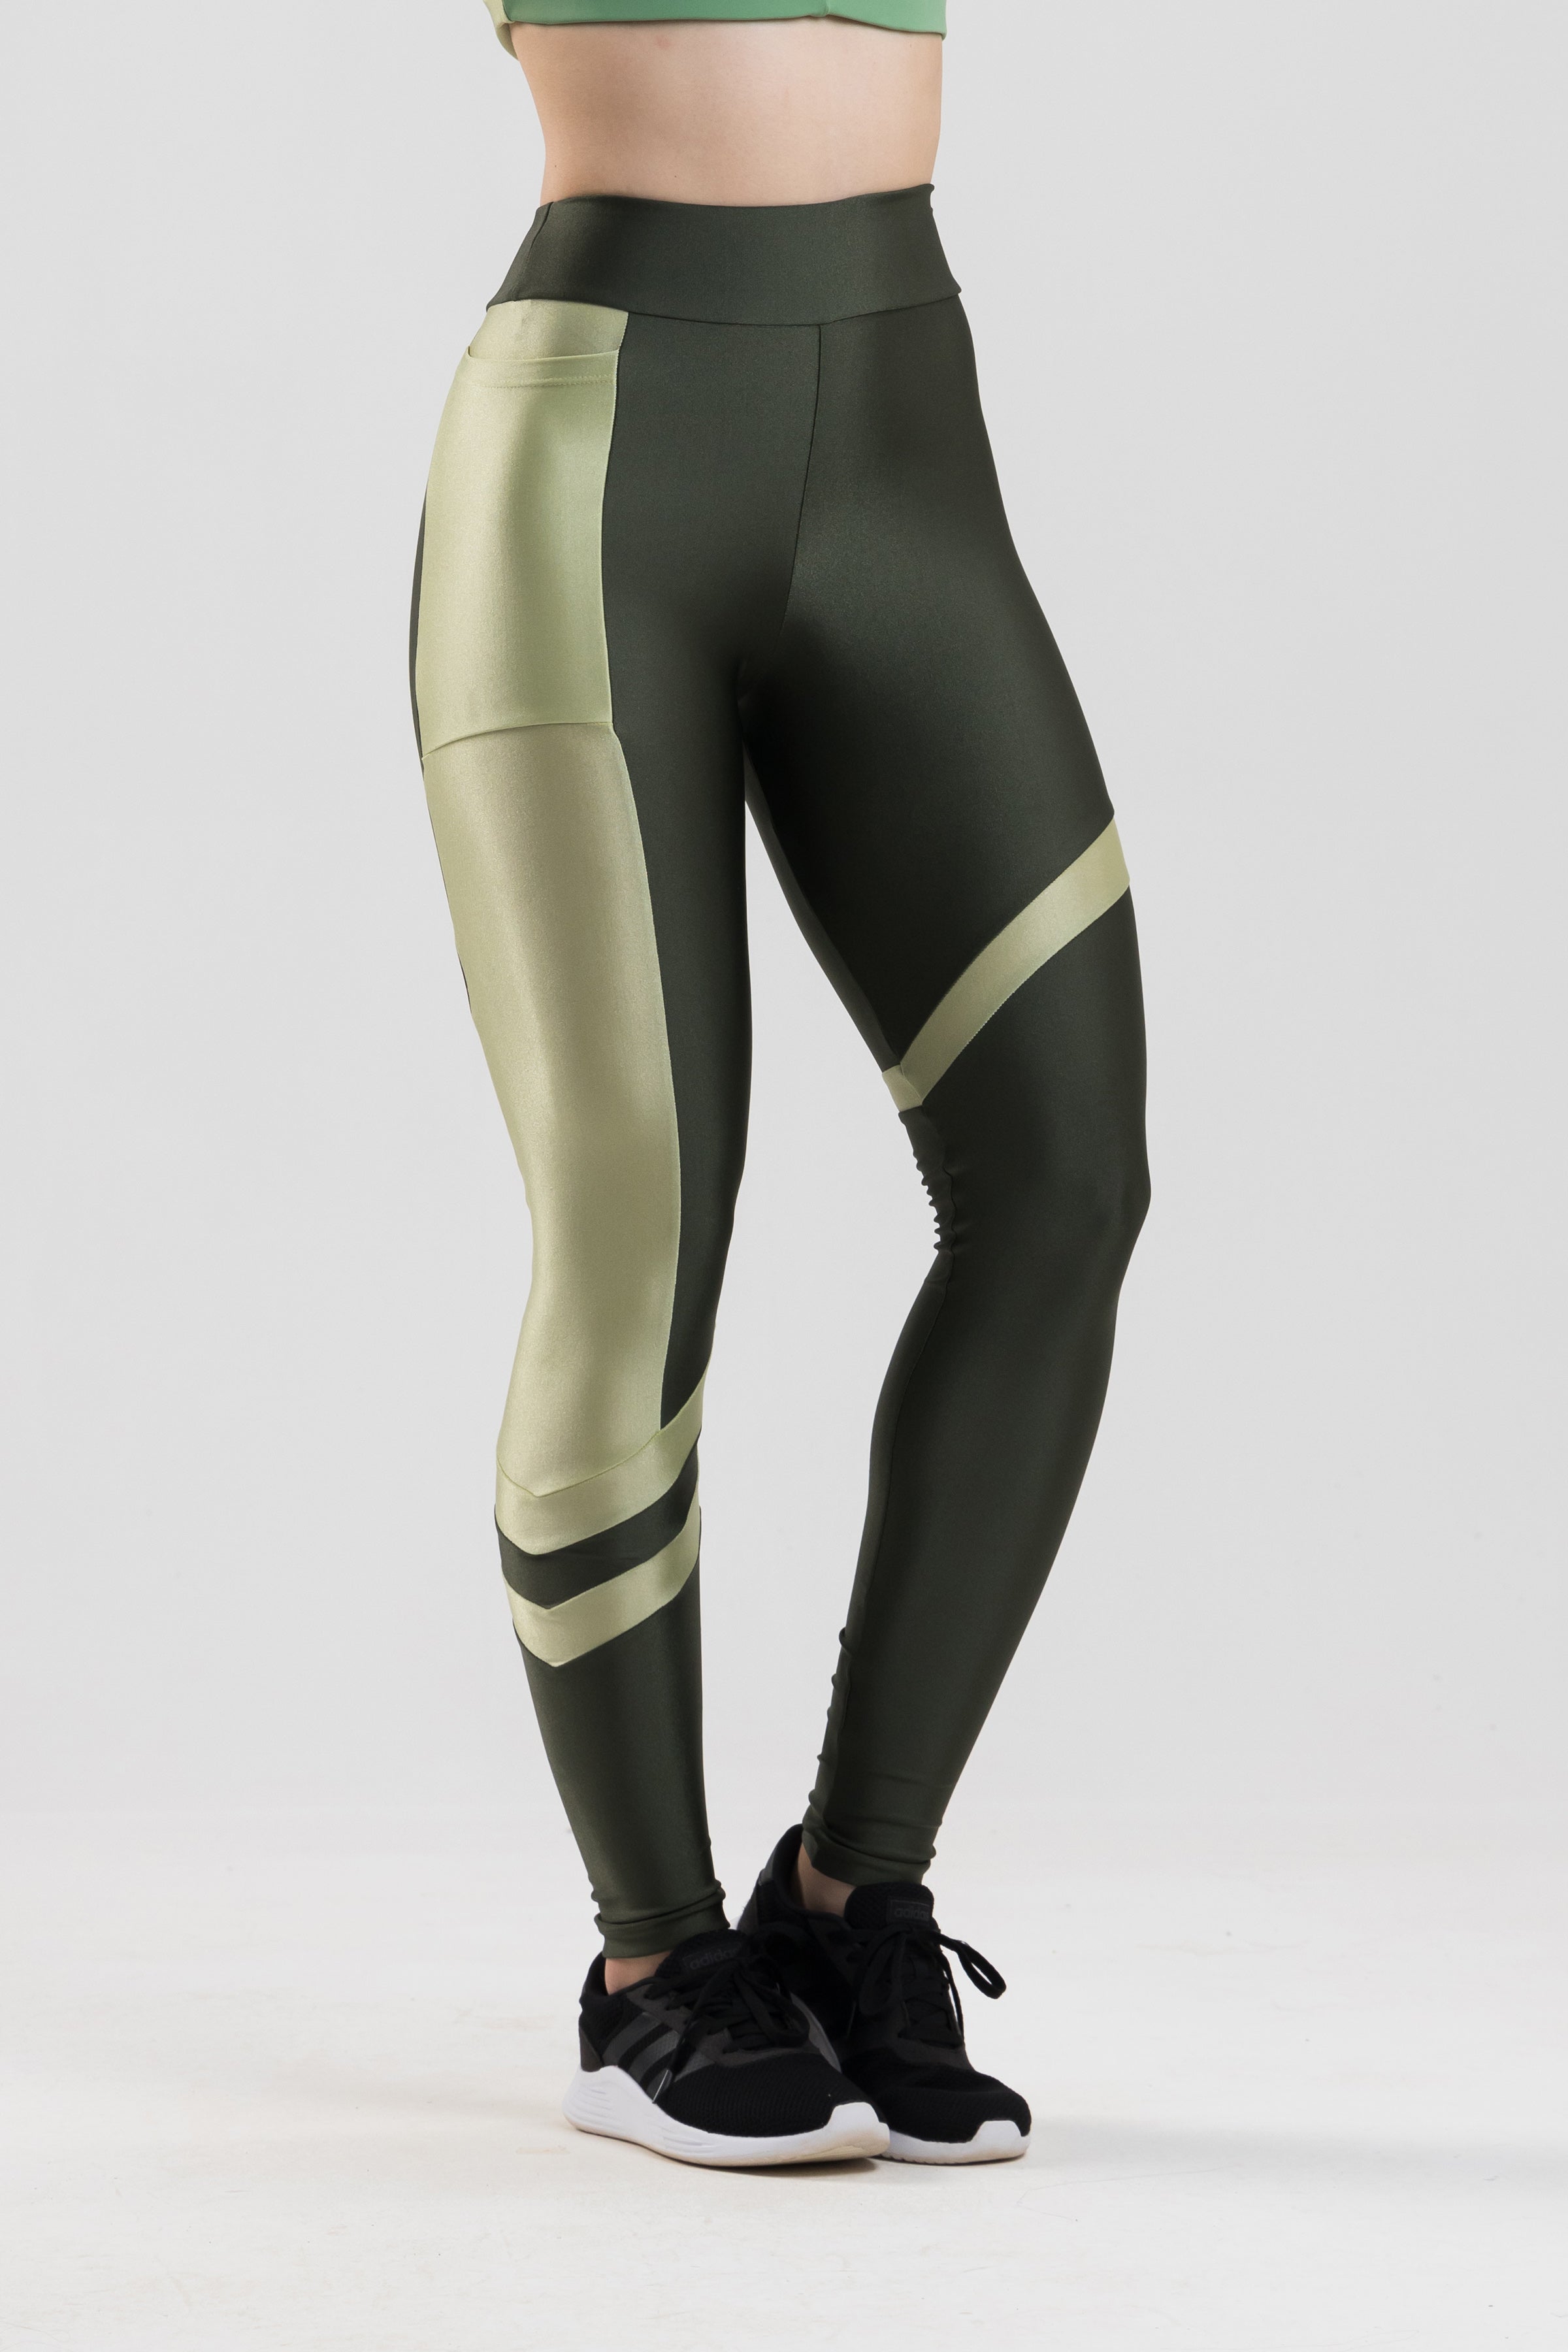 Ideology Side Stripe Cropped Women's Plus Size Athletic Leggings NWT Green  Ash